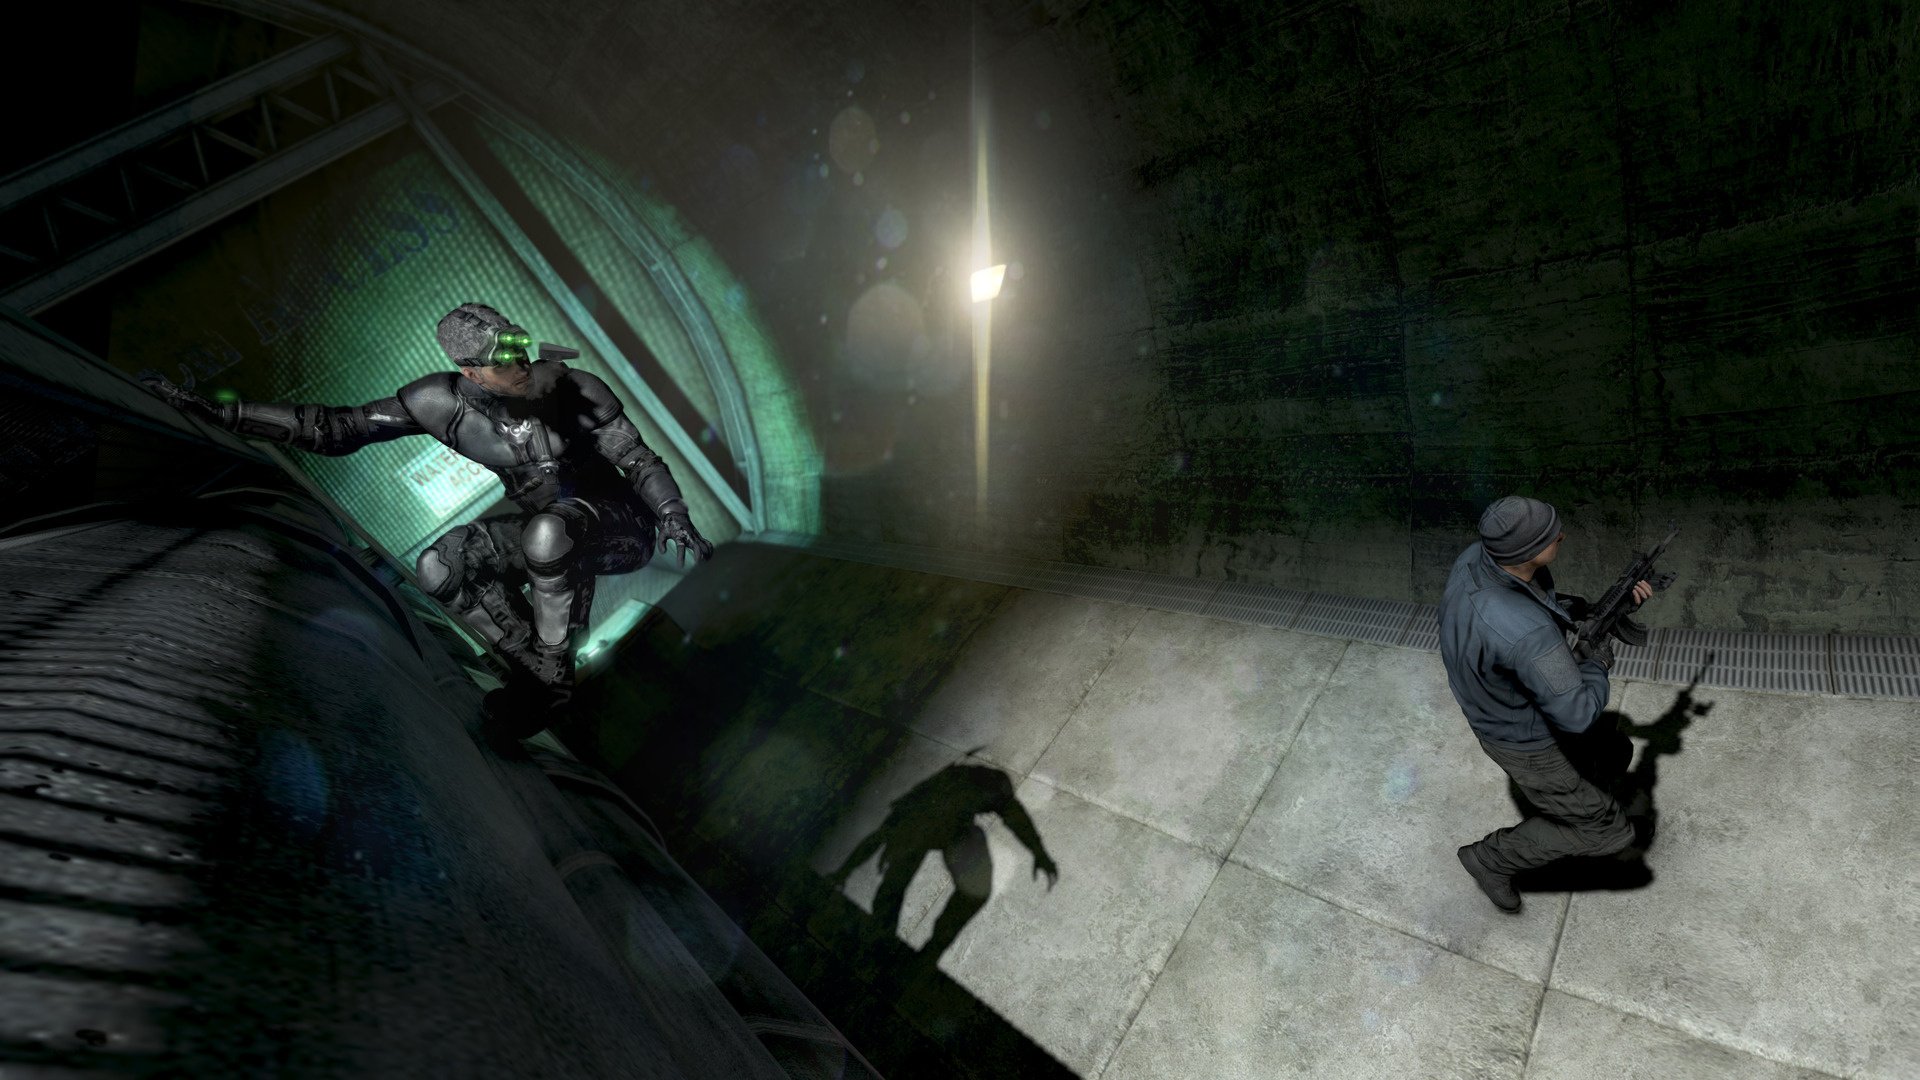  Tom Clancy's Splinter Cell Blacklist - Nintendo Wii U